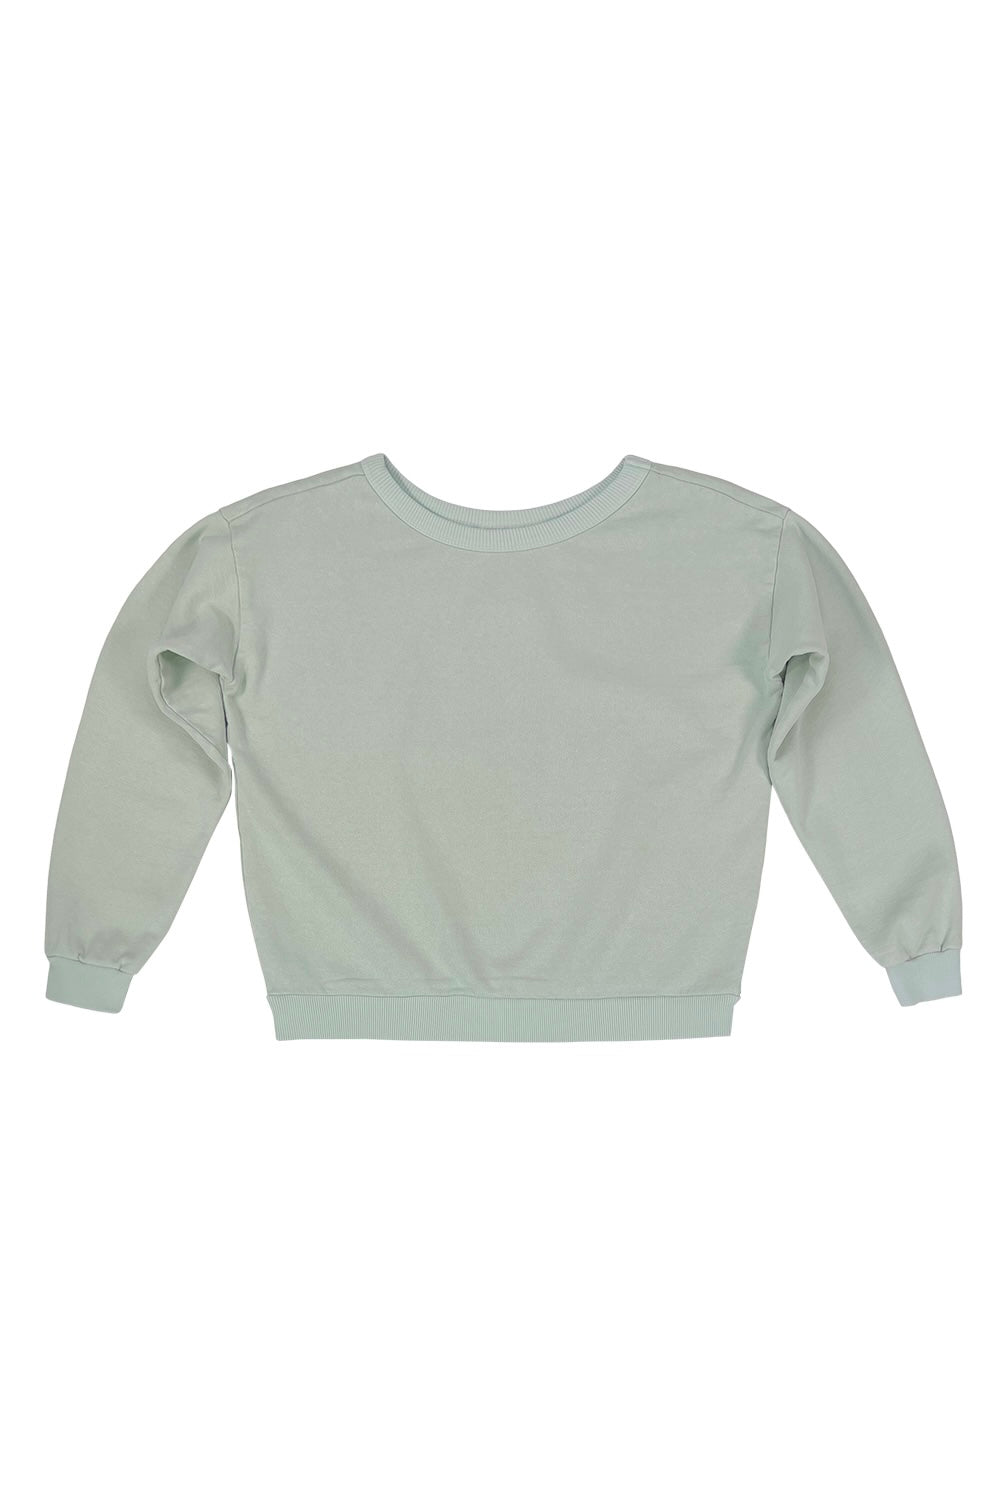 Laguna Cropped Sweatshirt | Jungmaven Hemp Clothing & Accessories / Color: Seafoam Green